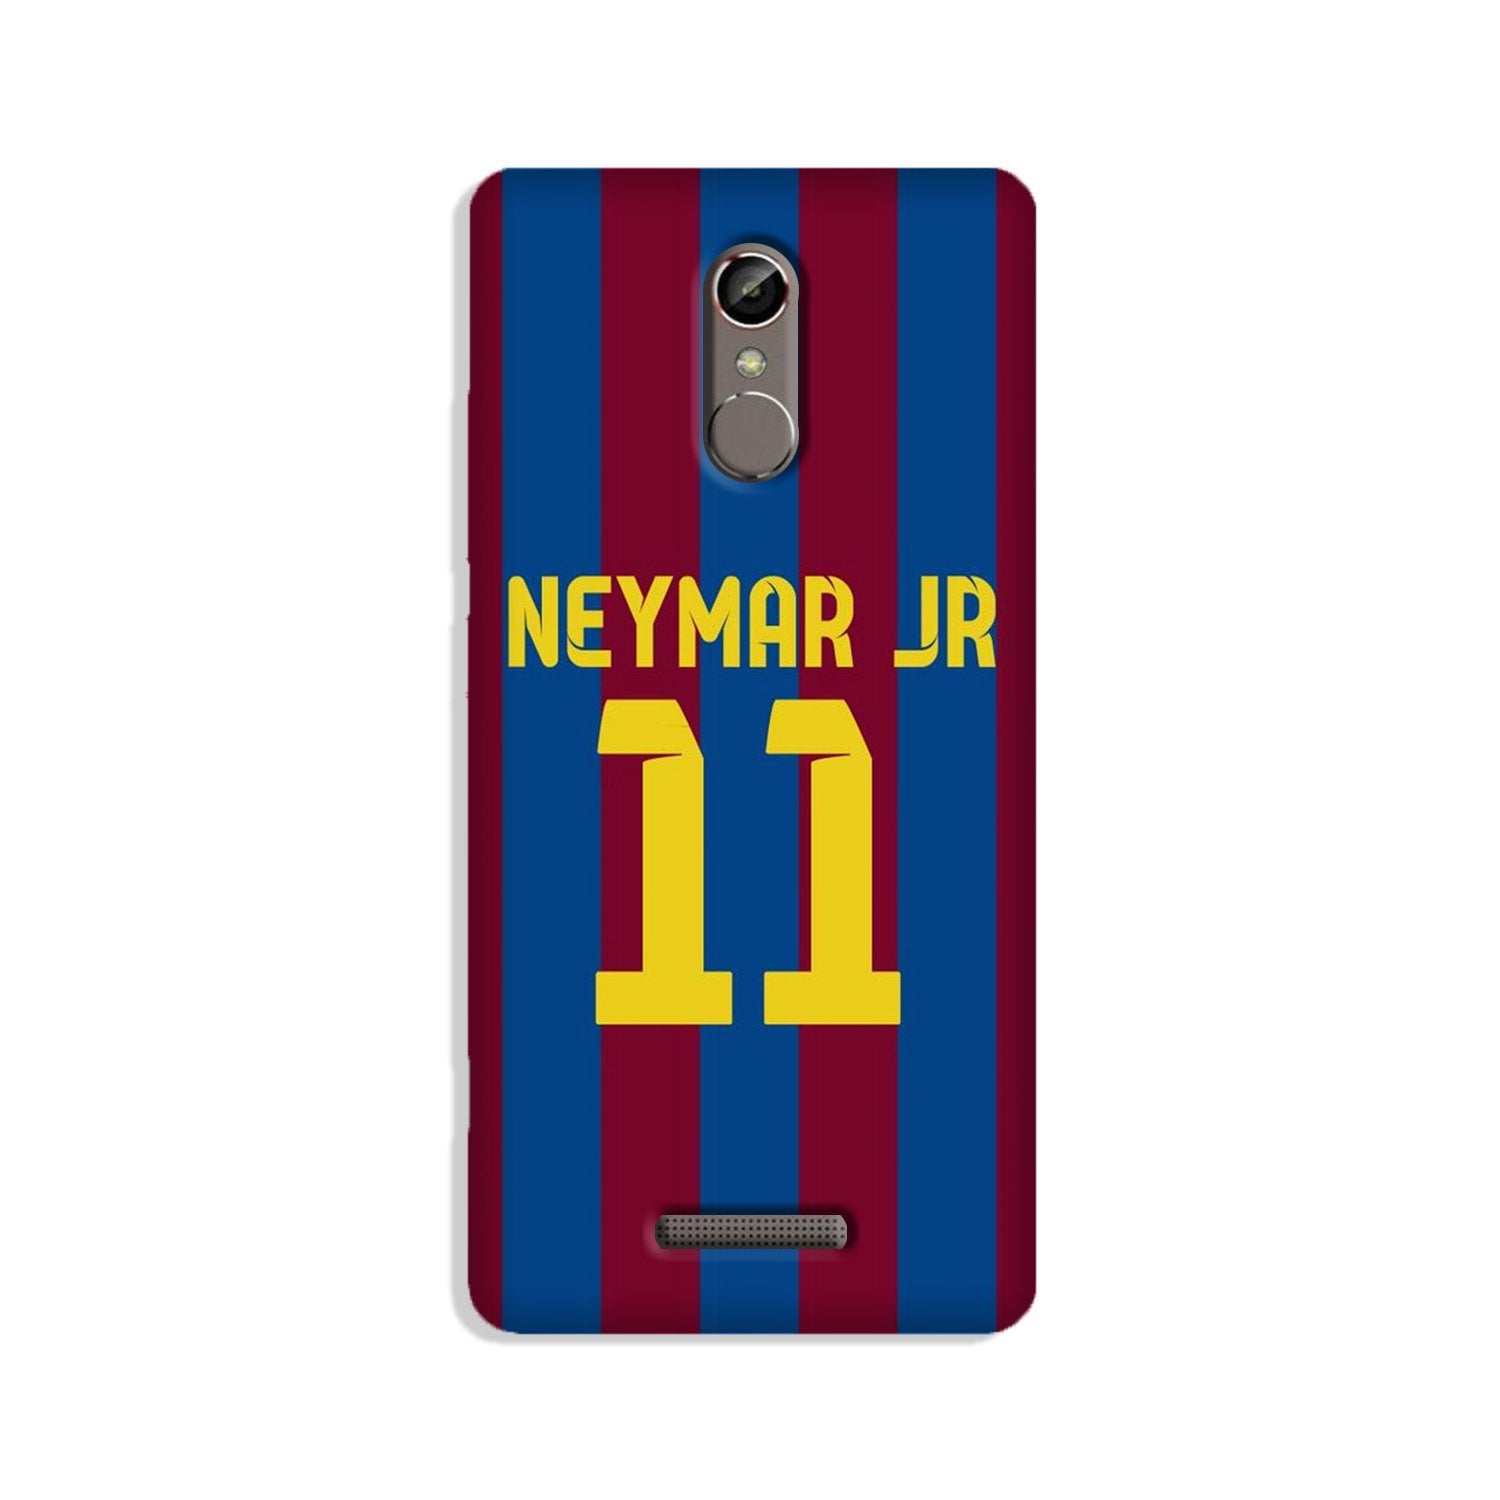 Neymar Jr Case for Redmi Note 3(Design - 162)